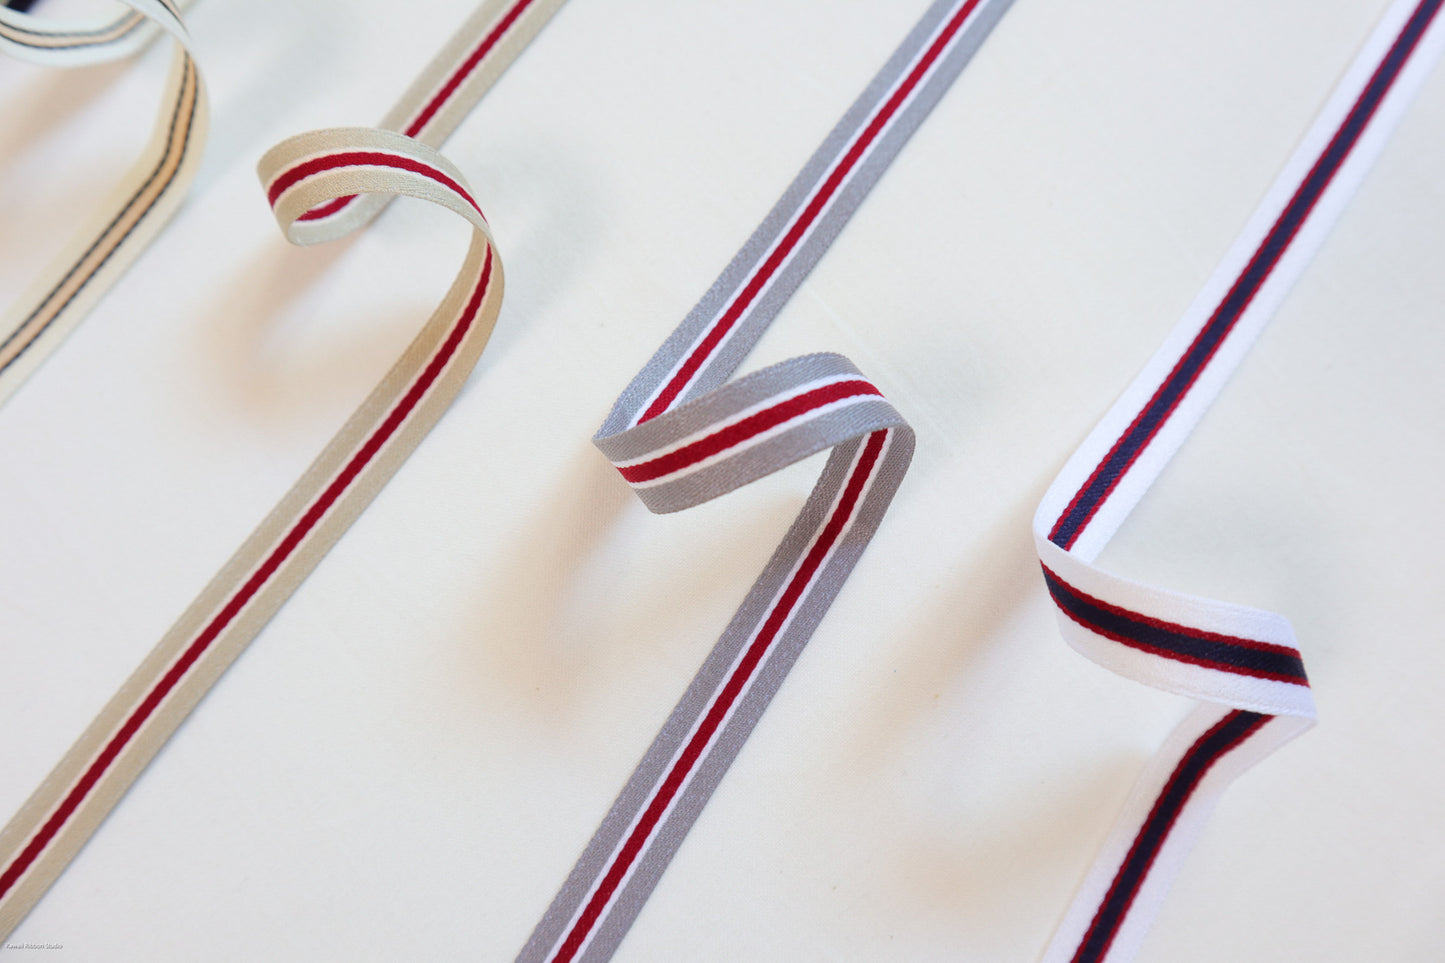 12mm Stripe polyester tape / ribbon